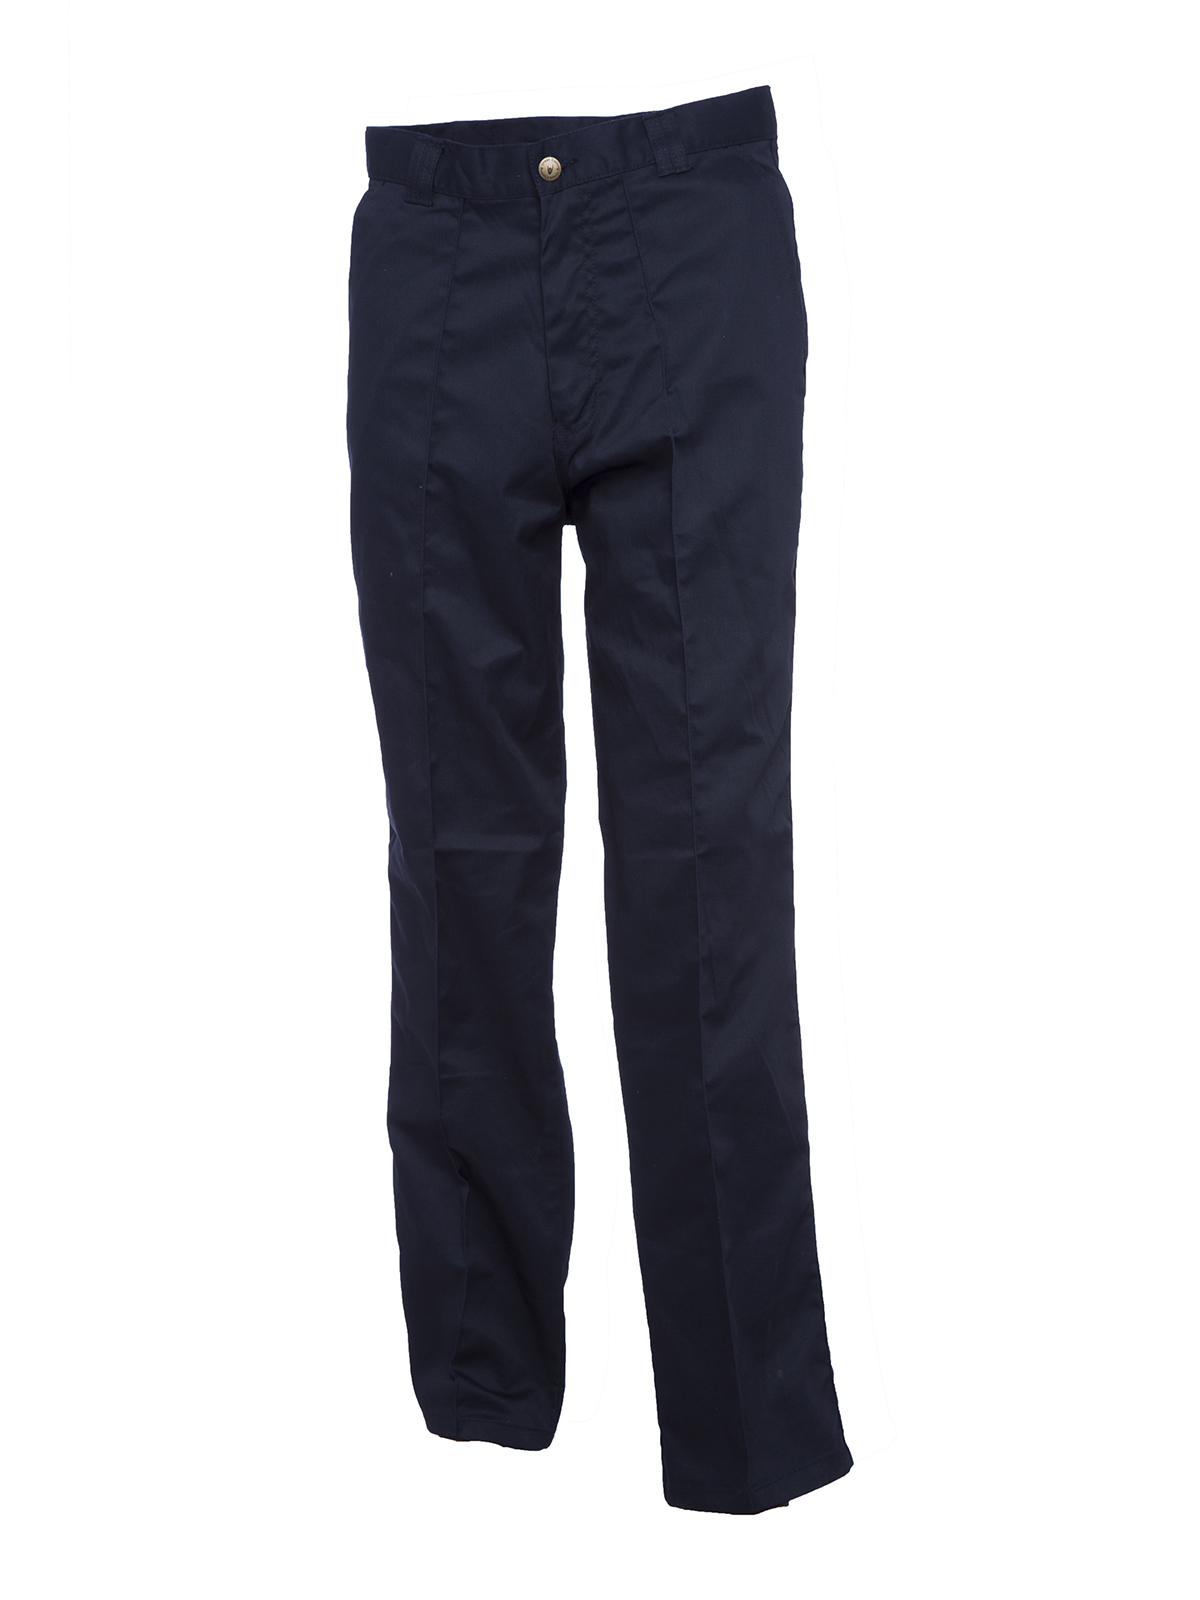 Workwear Trousers, Navy Blue - 32L